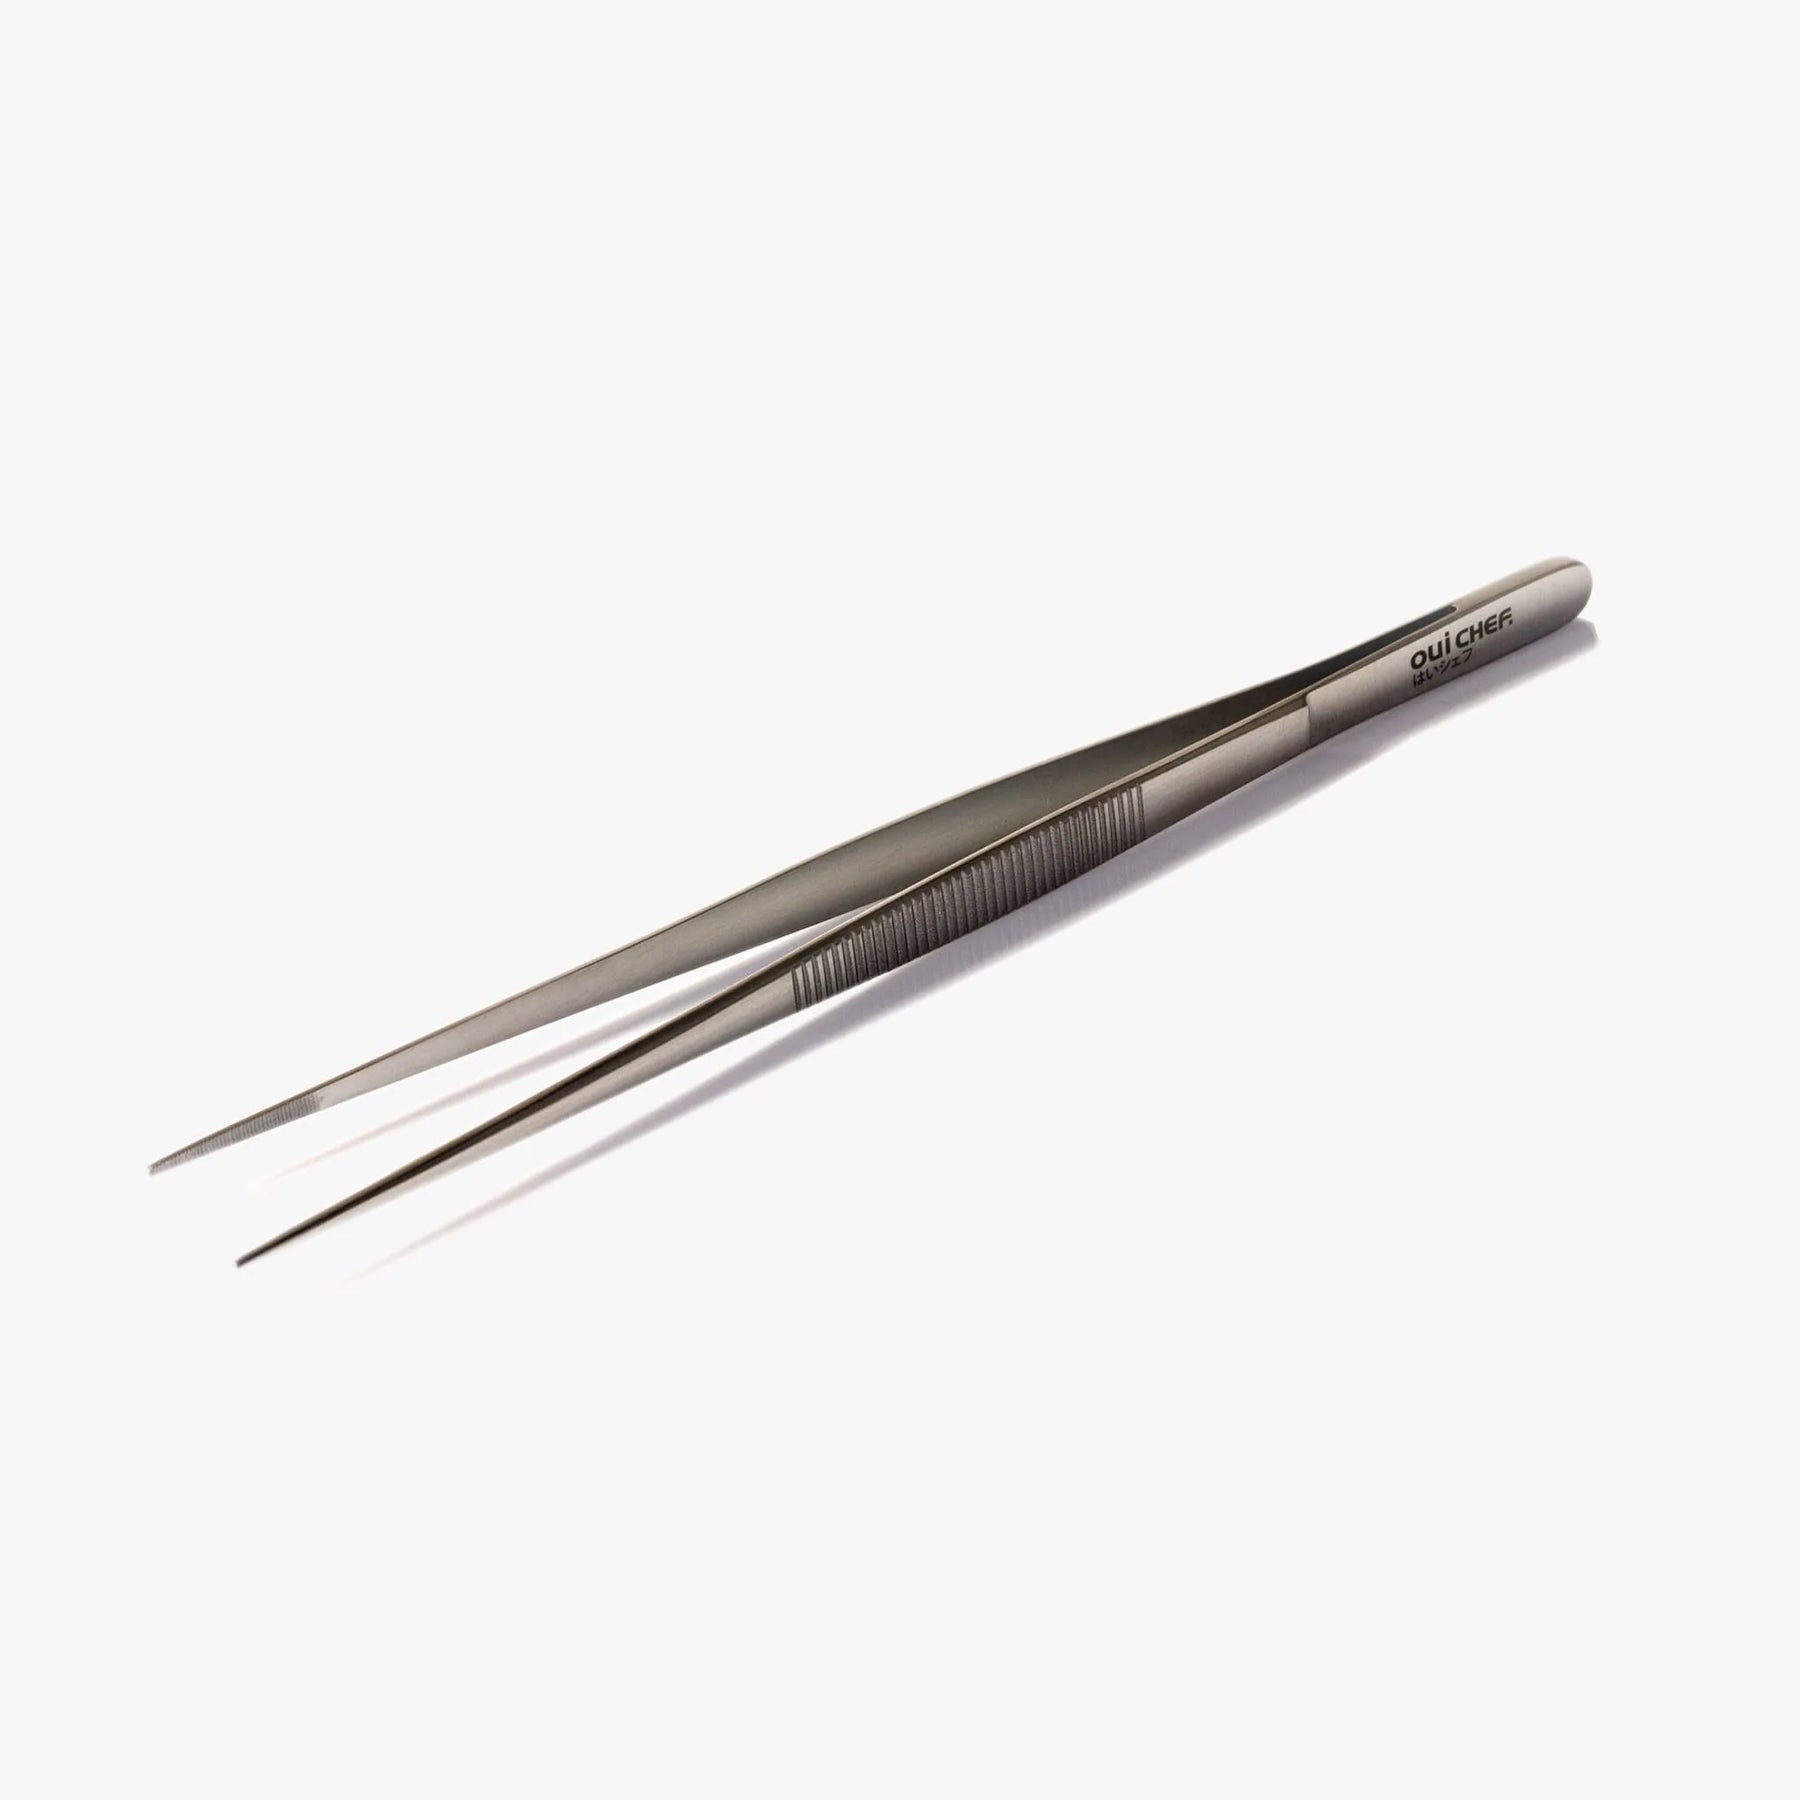 OUI CHEF superfine straight tweezers 20cm stainless steel